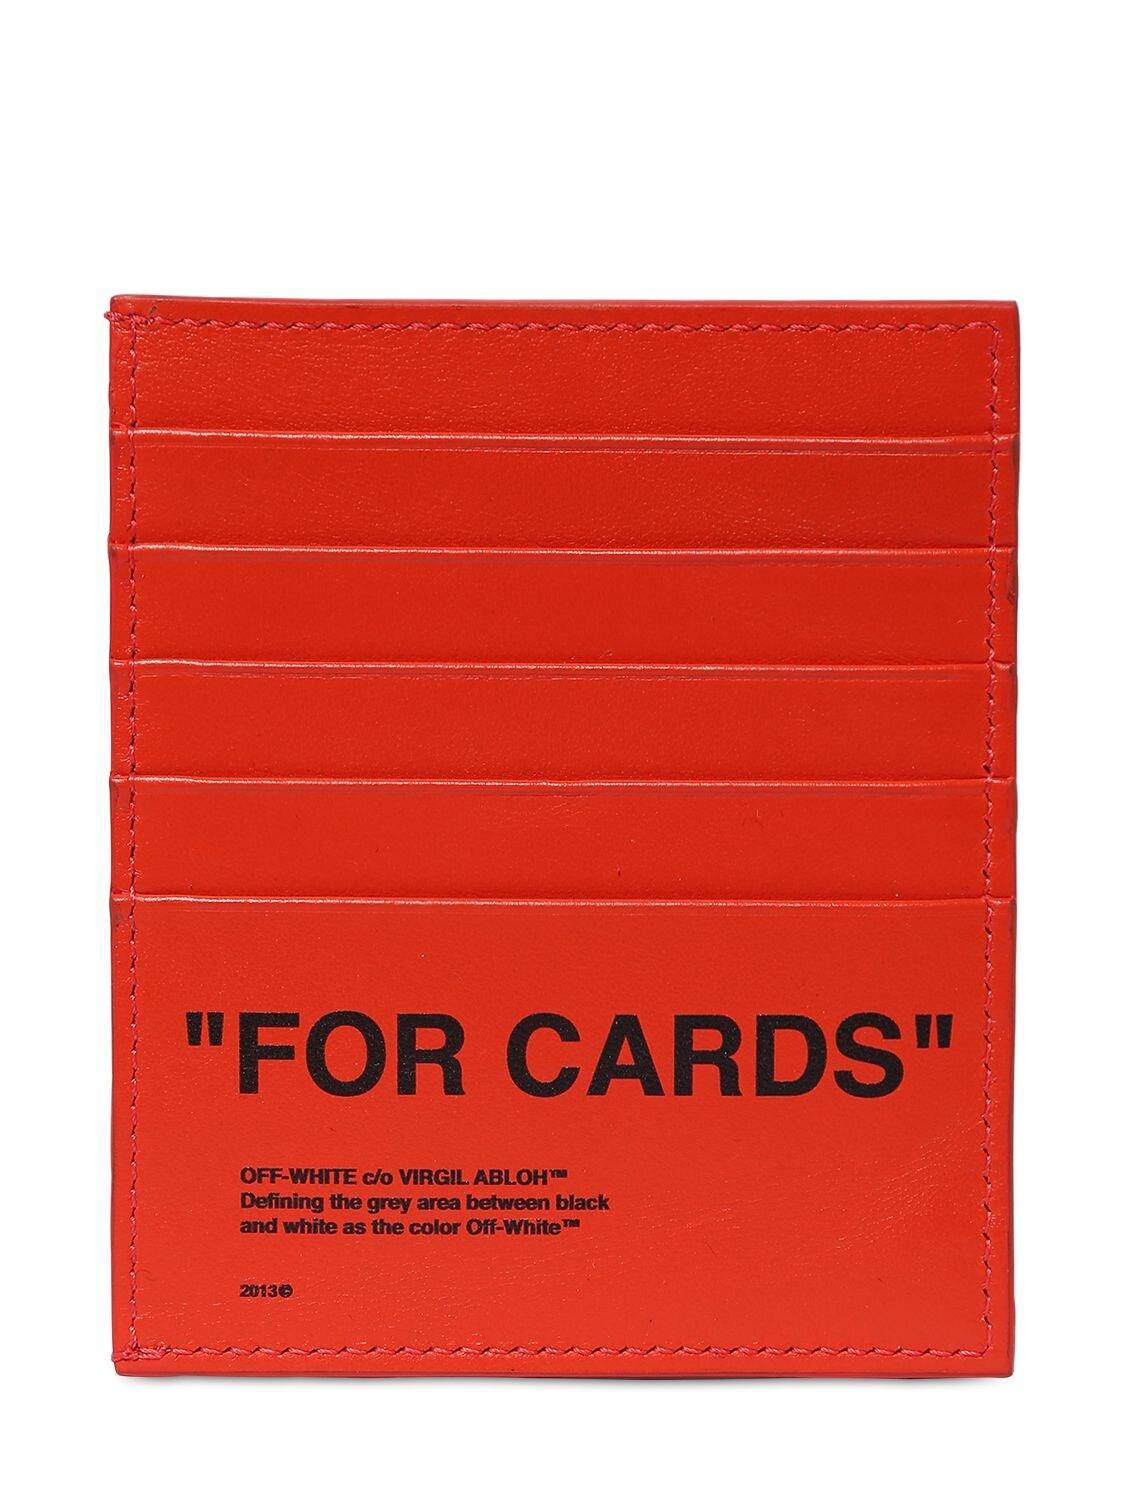 Virgil Abloh Postcard: Advertise Here